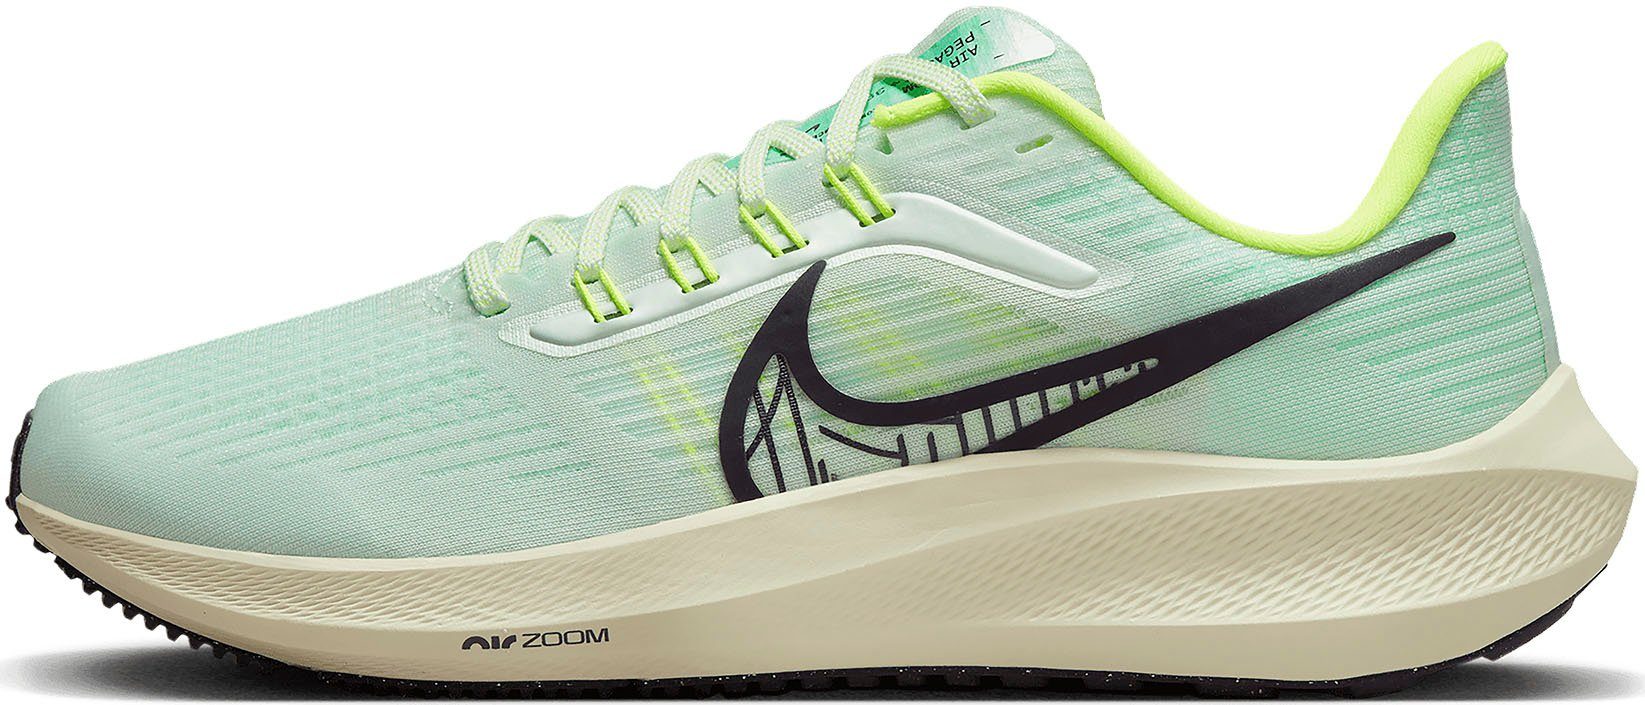 39 AIR Nike BARELY-GREEN-CAVE-PURPLE-MINT-FOAM-VOLT PEGASUS ZOOM Laufschuh